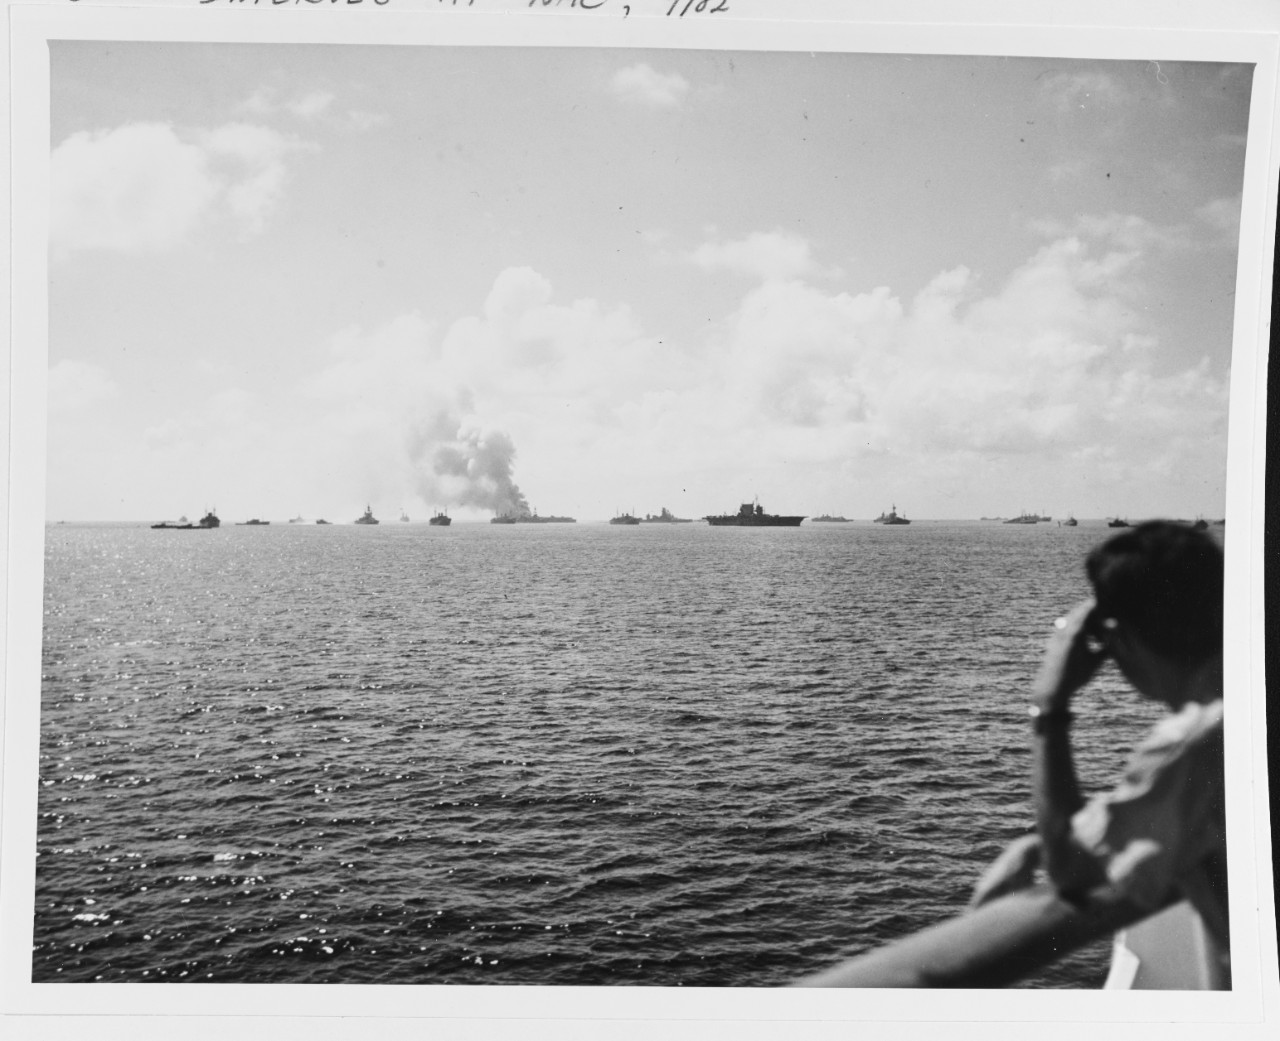 Bikini Atoll A-Bomb Tests, 1946